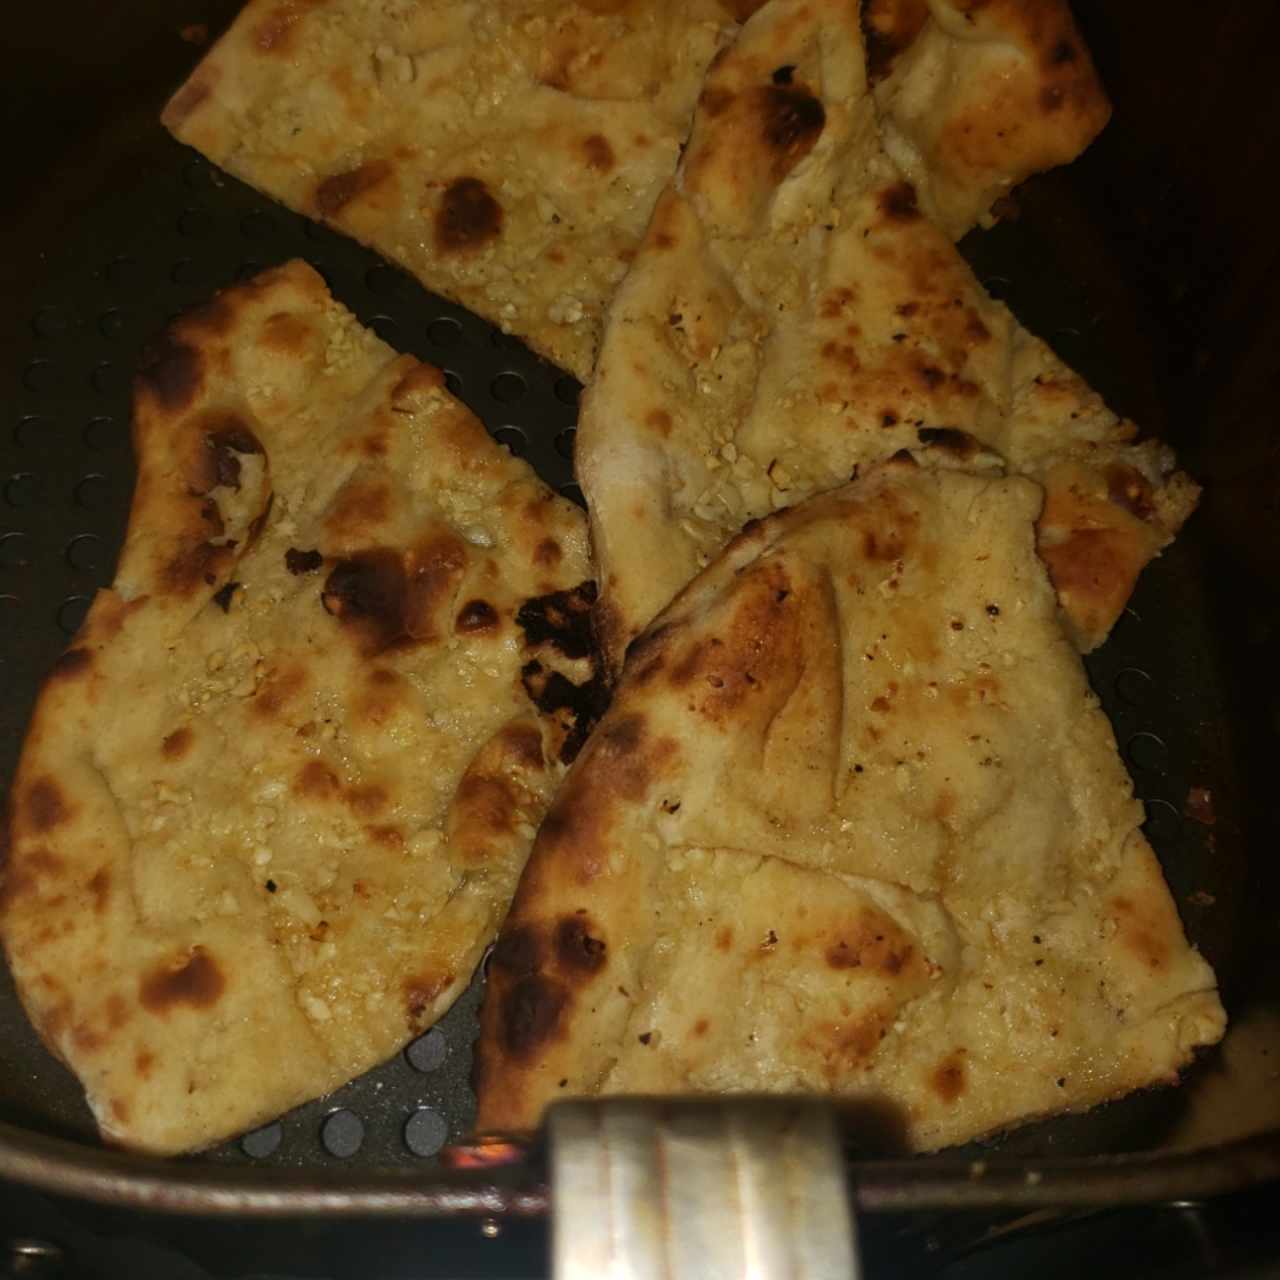 Pan/ Bread - Garlic Naan